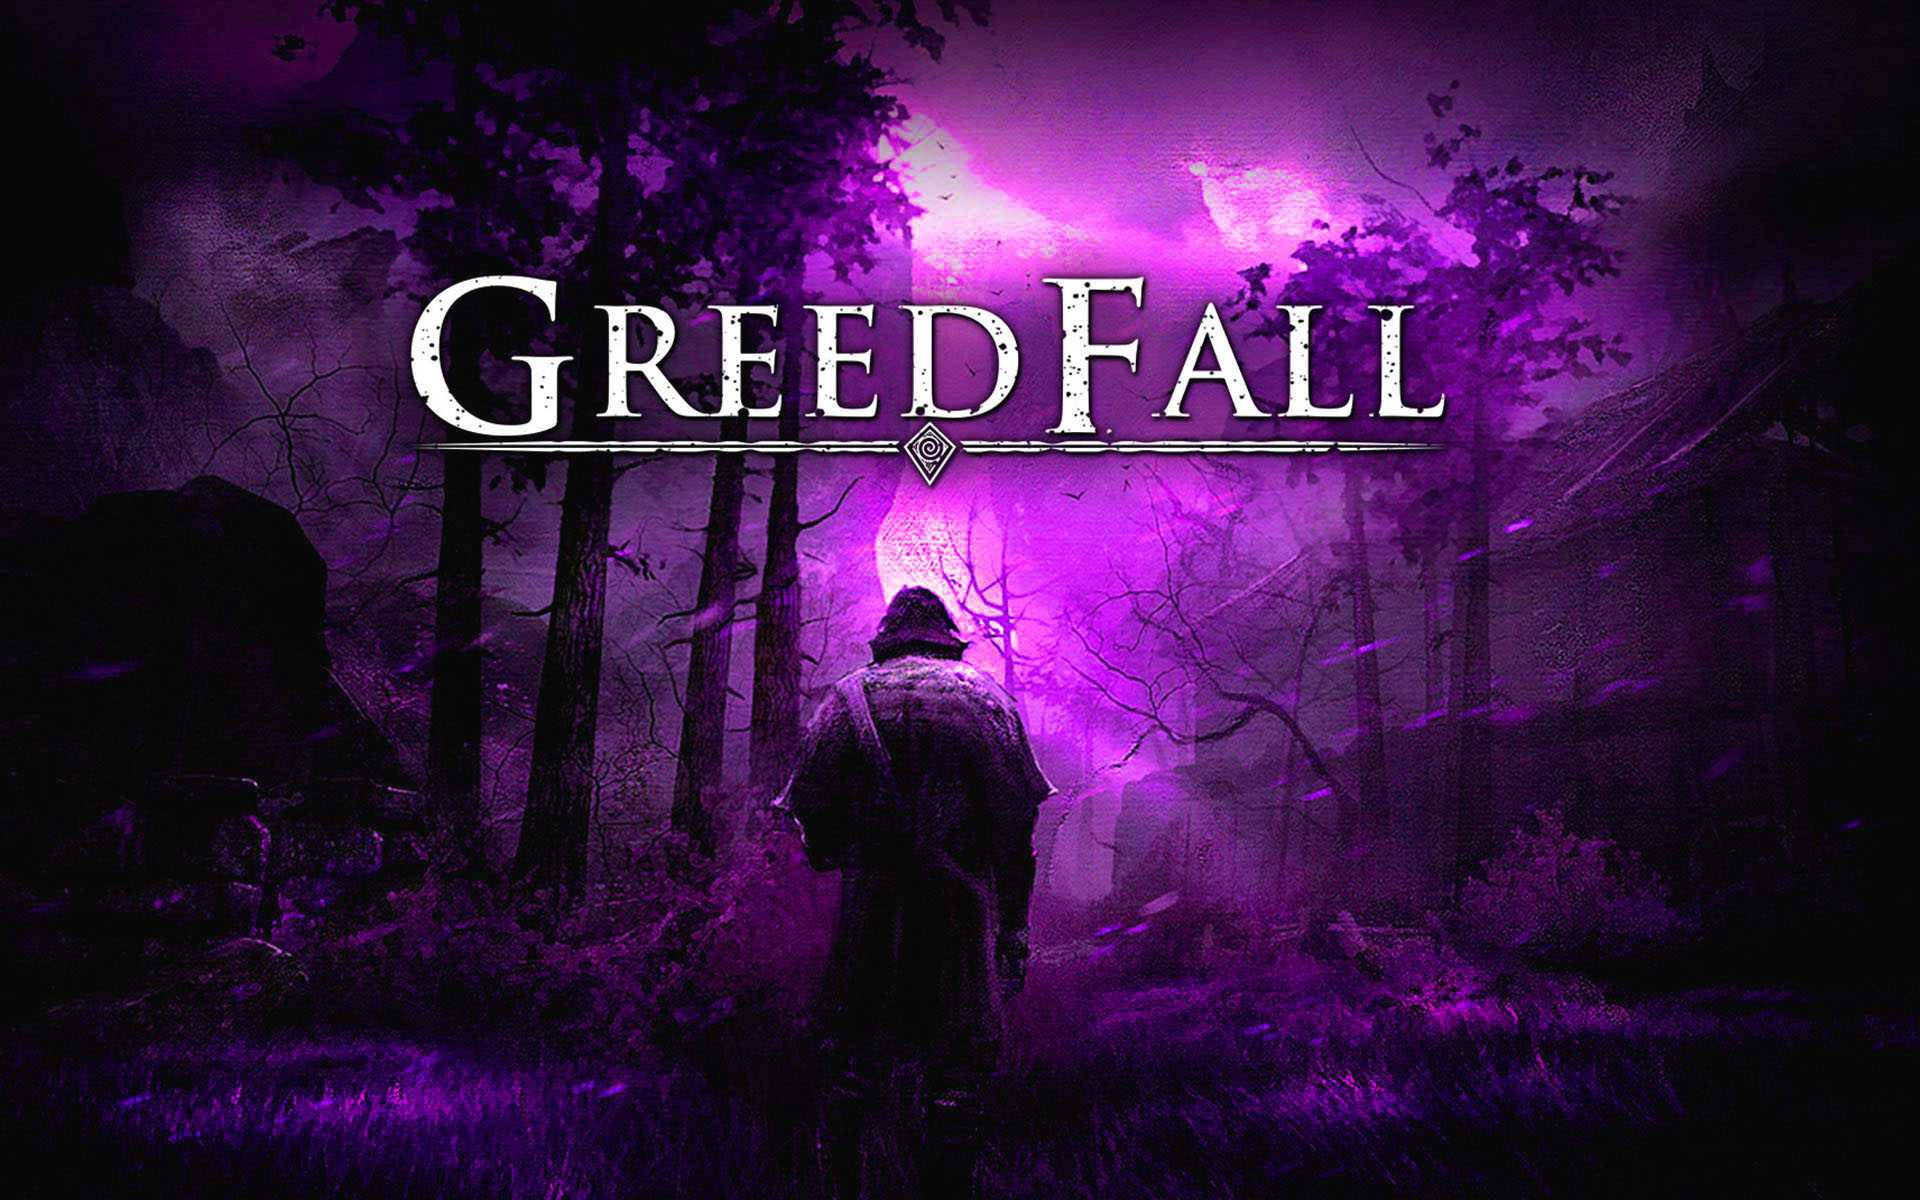 Greedfall Purple Forest Background